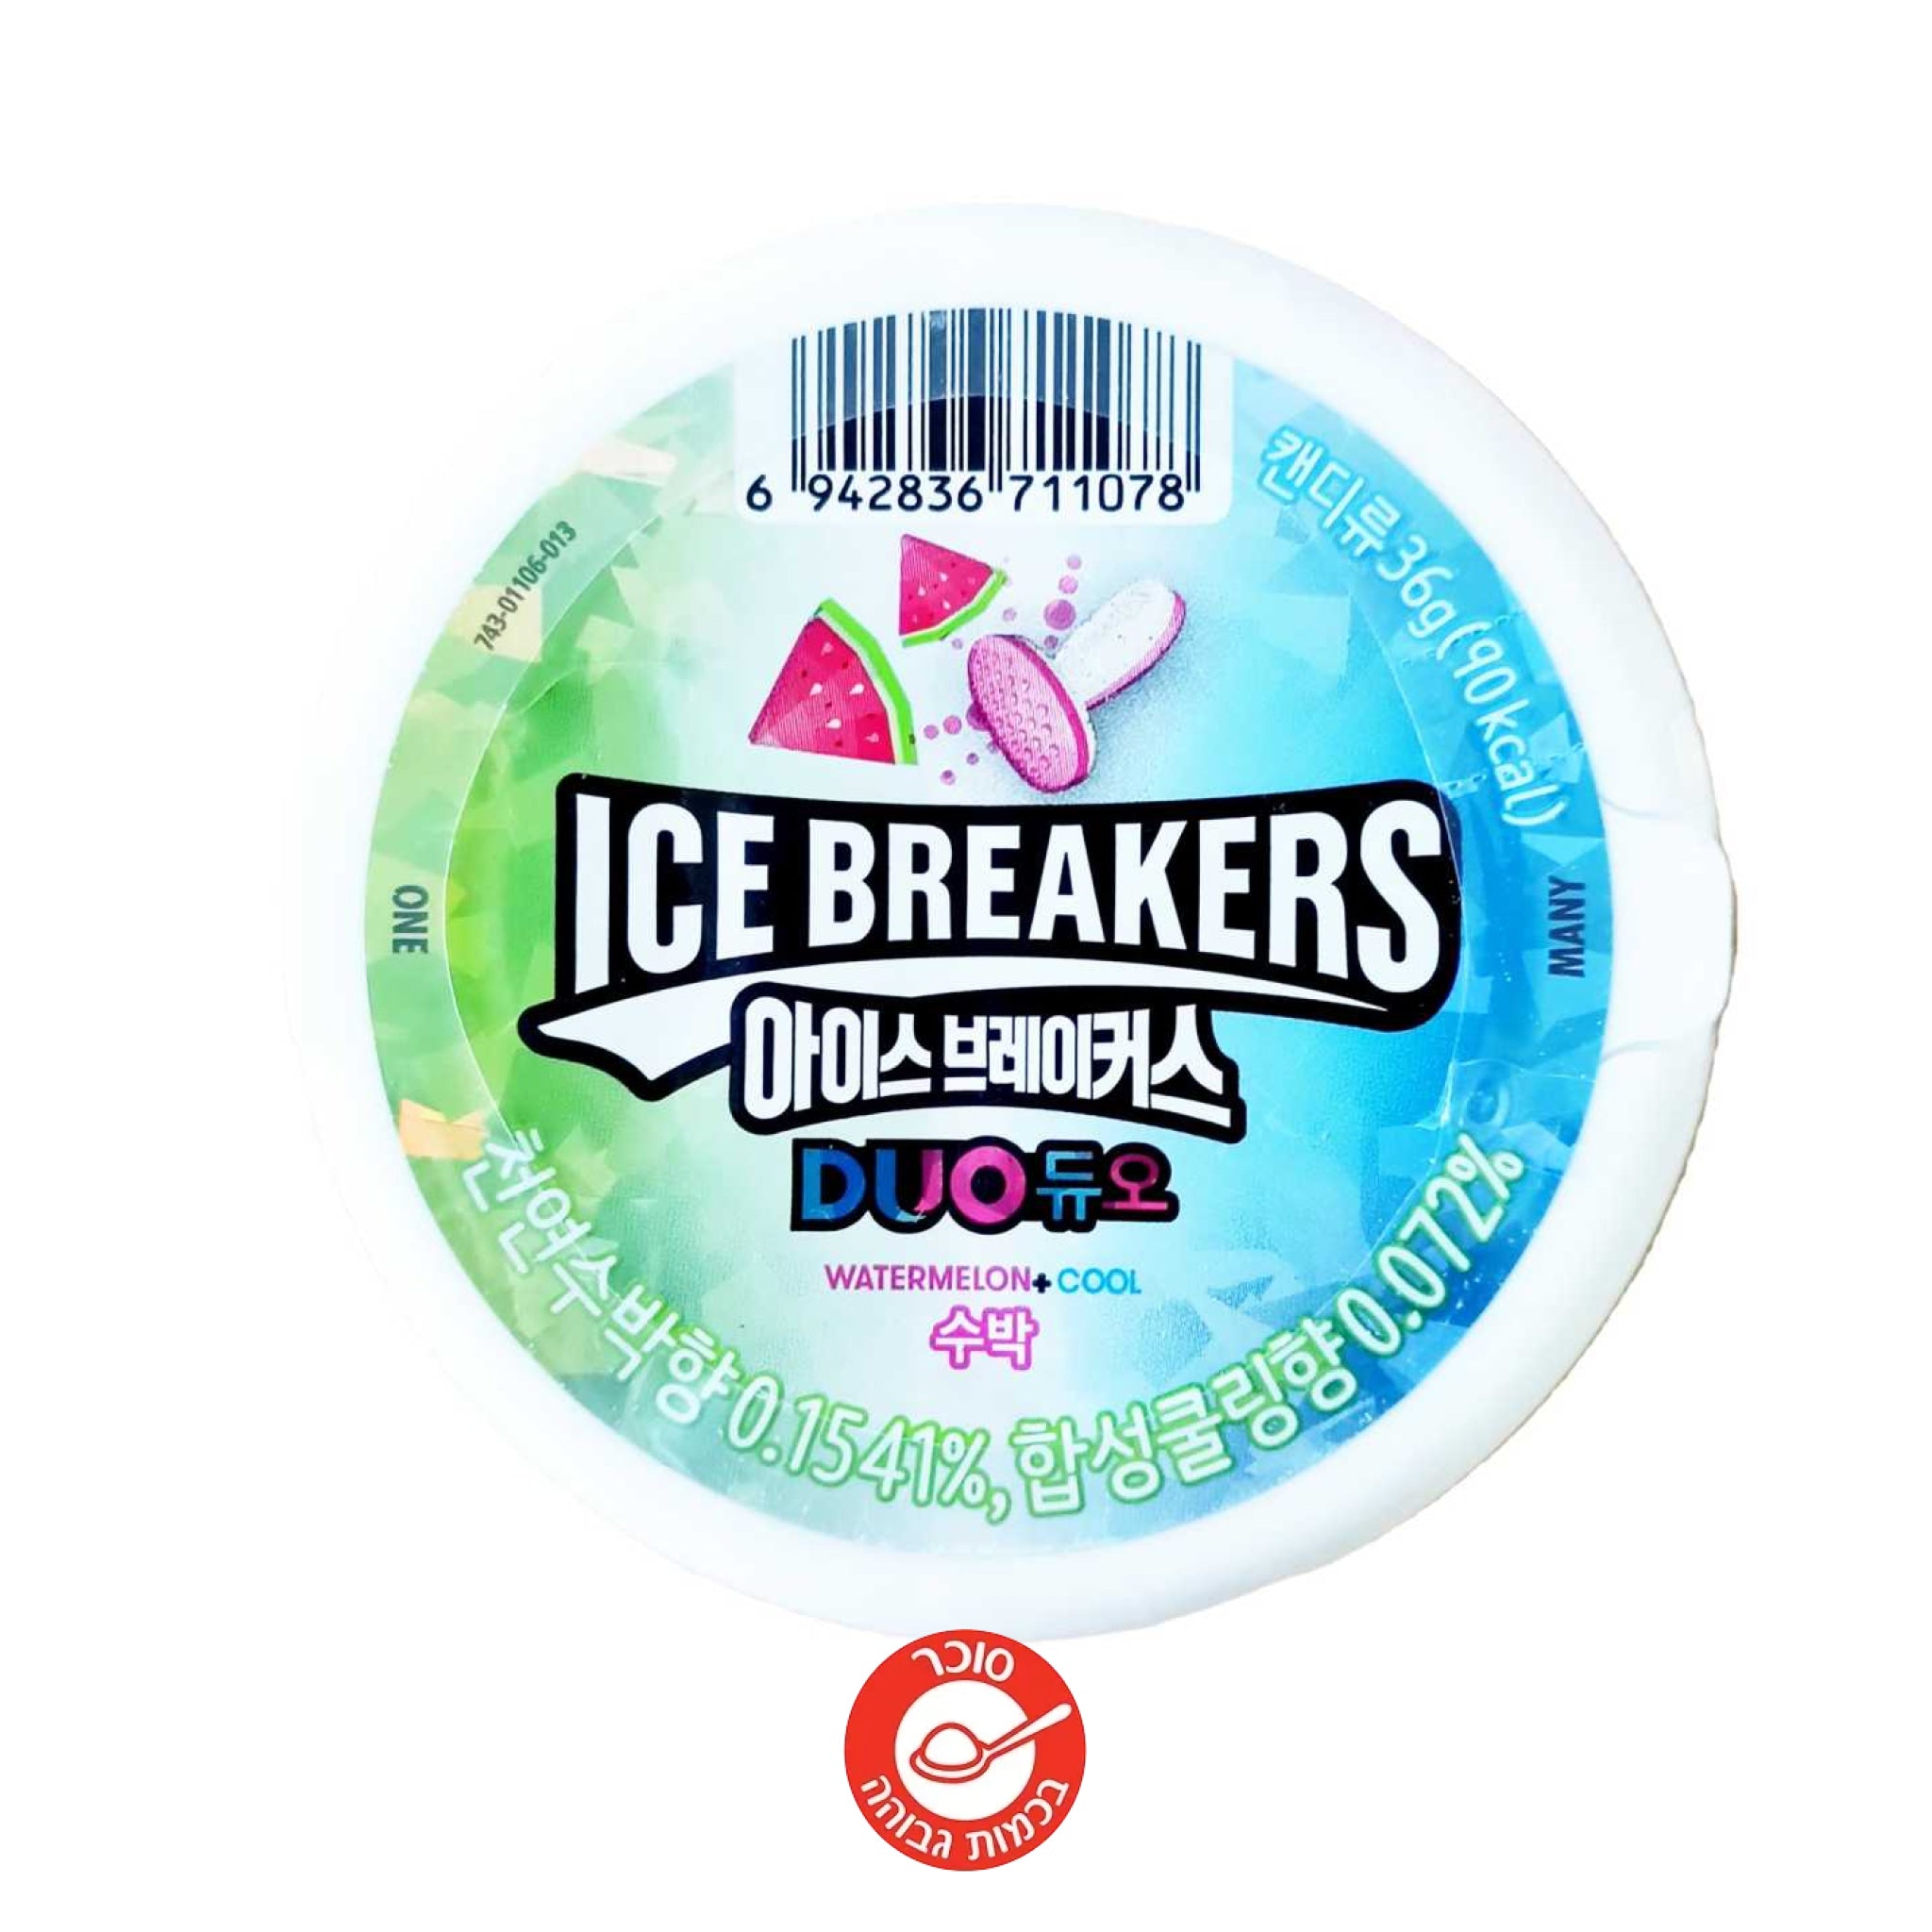 Ice Breakers Watermelon - אייס ברייקרס אבטיח - טעימים